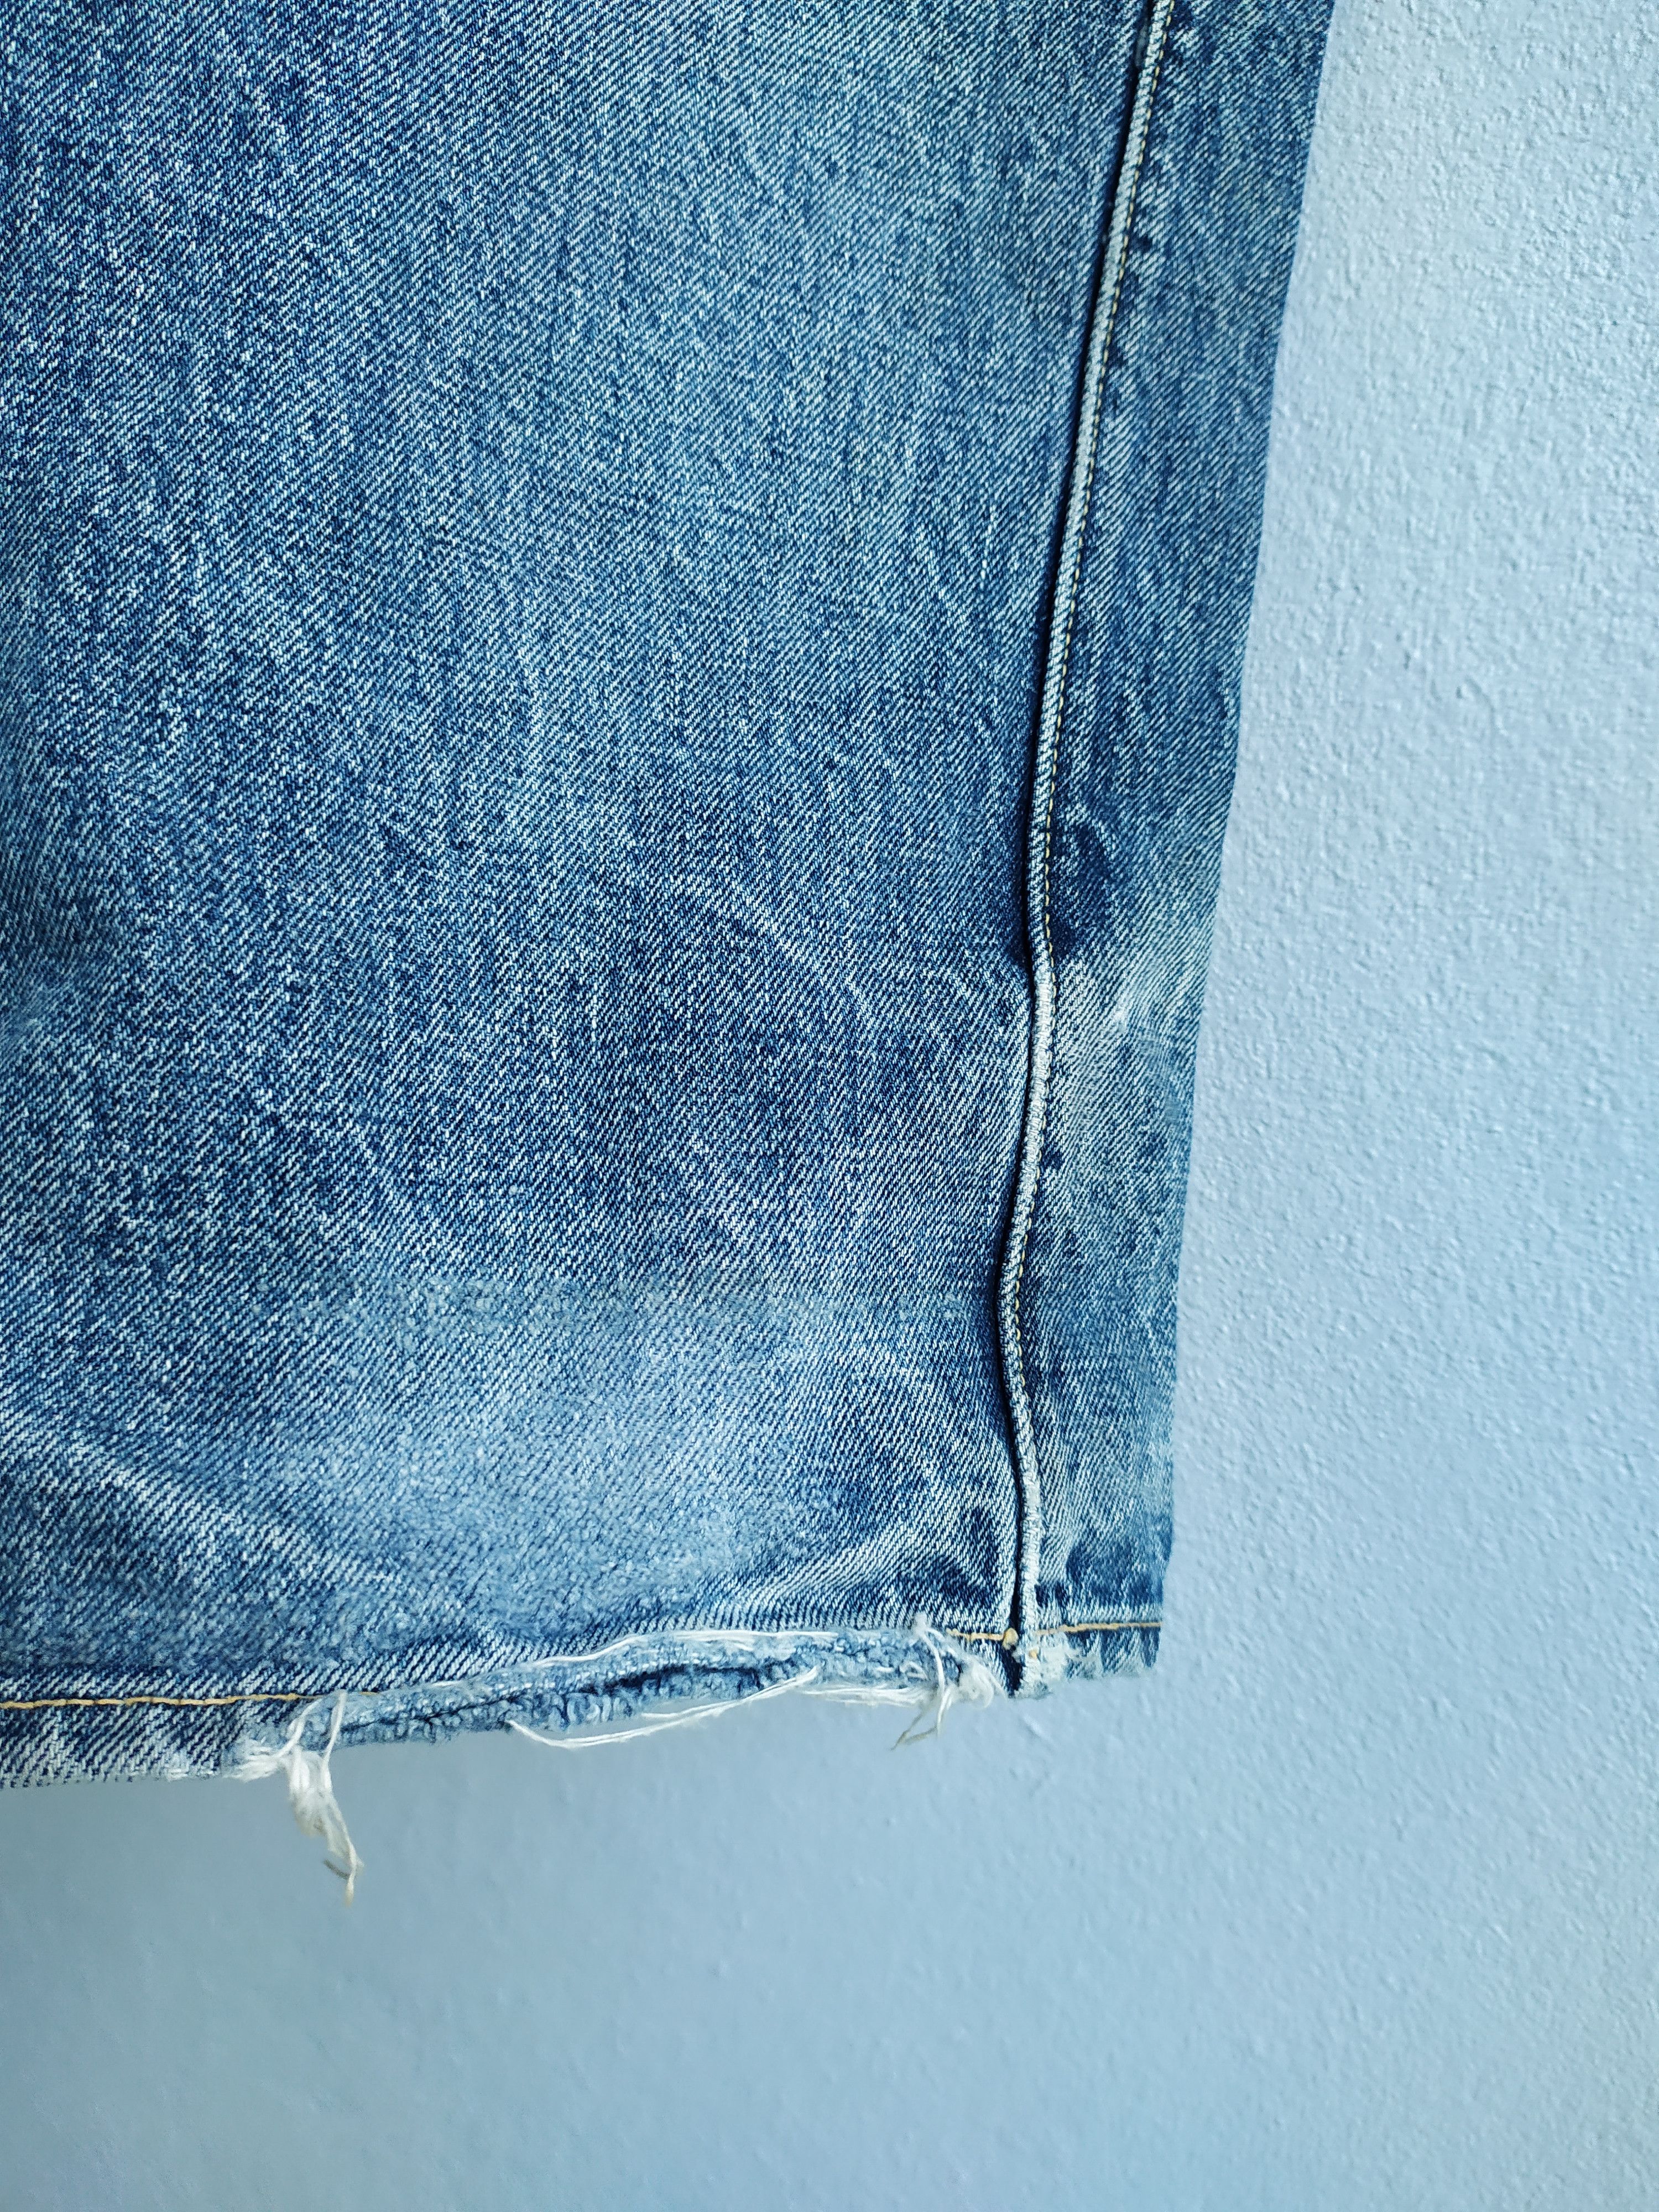 Vintage Vintage Denime Selvage Denim jeans Size US 31 - 12 Thumbnail